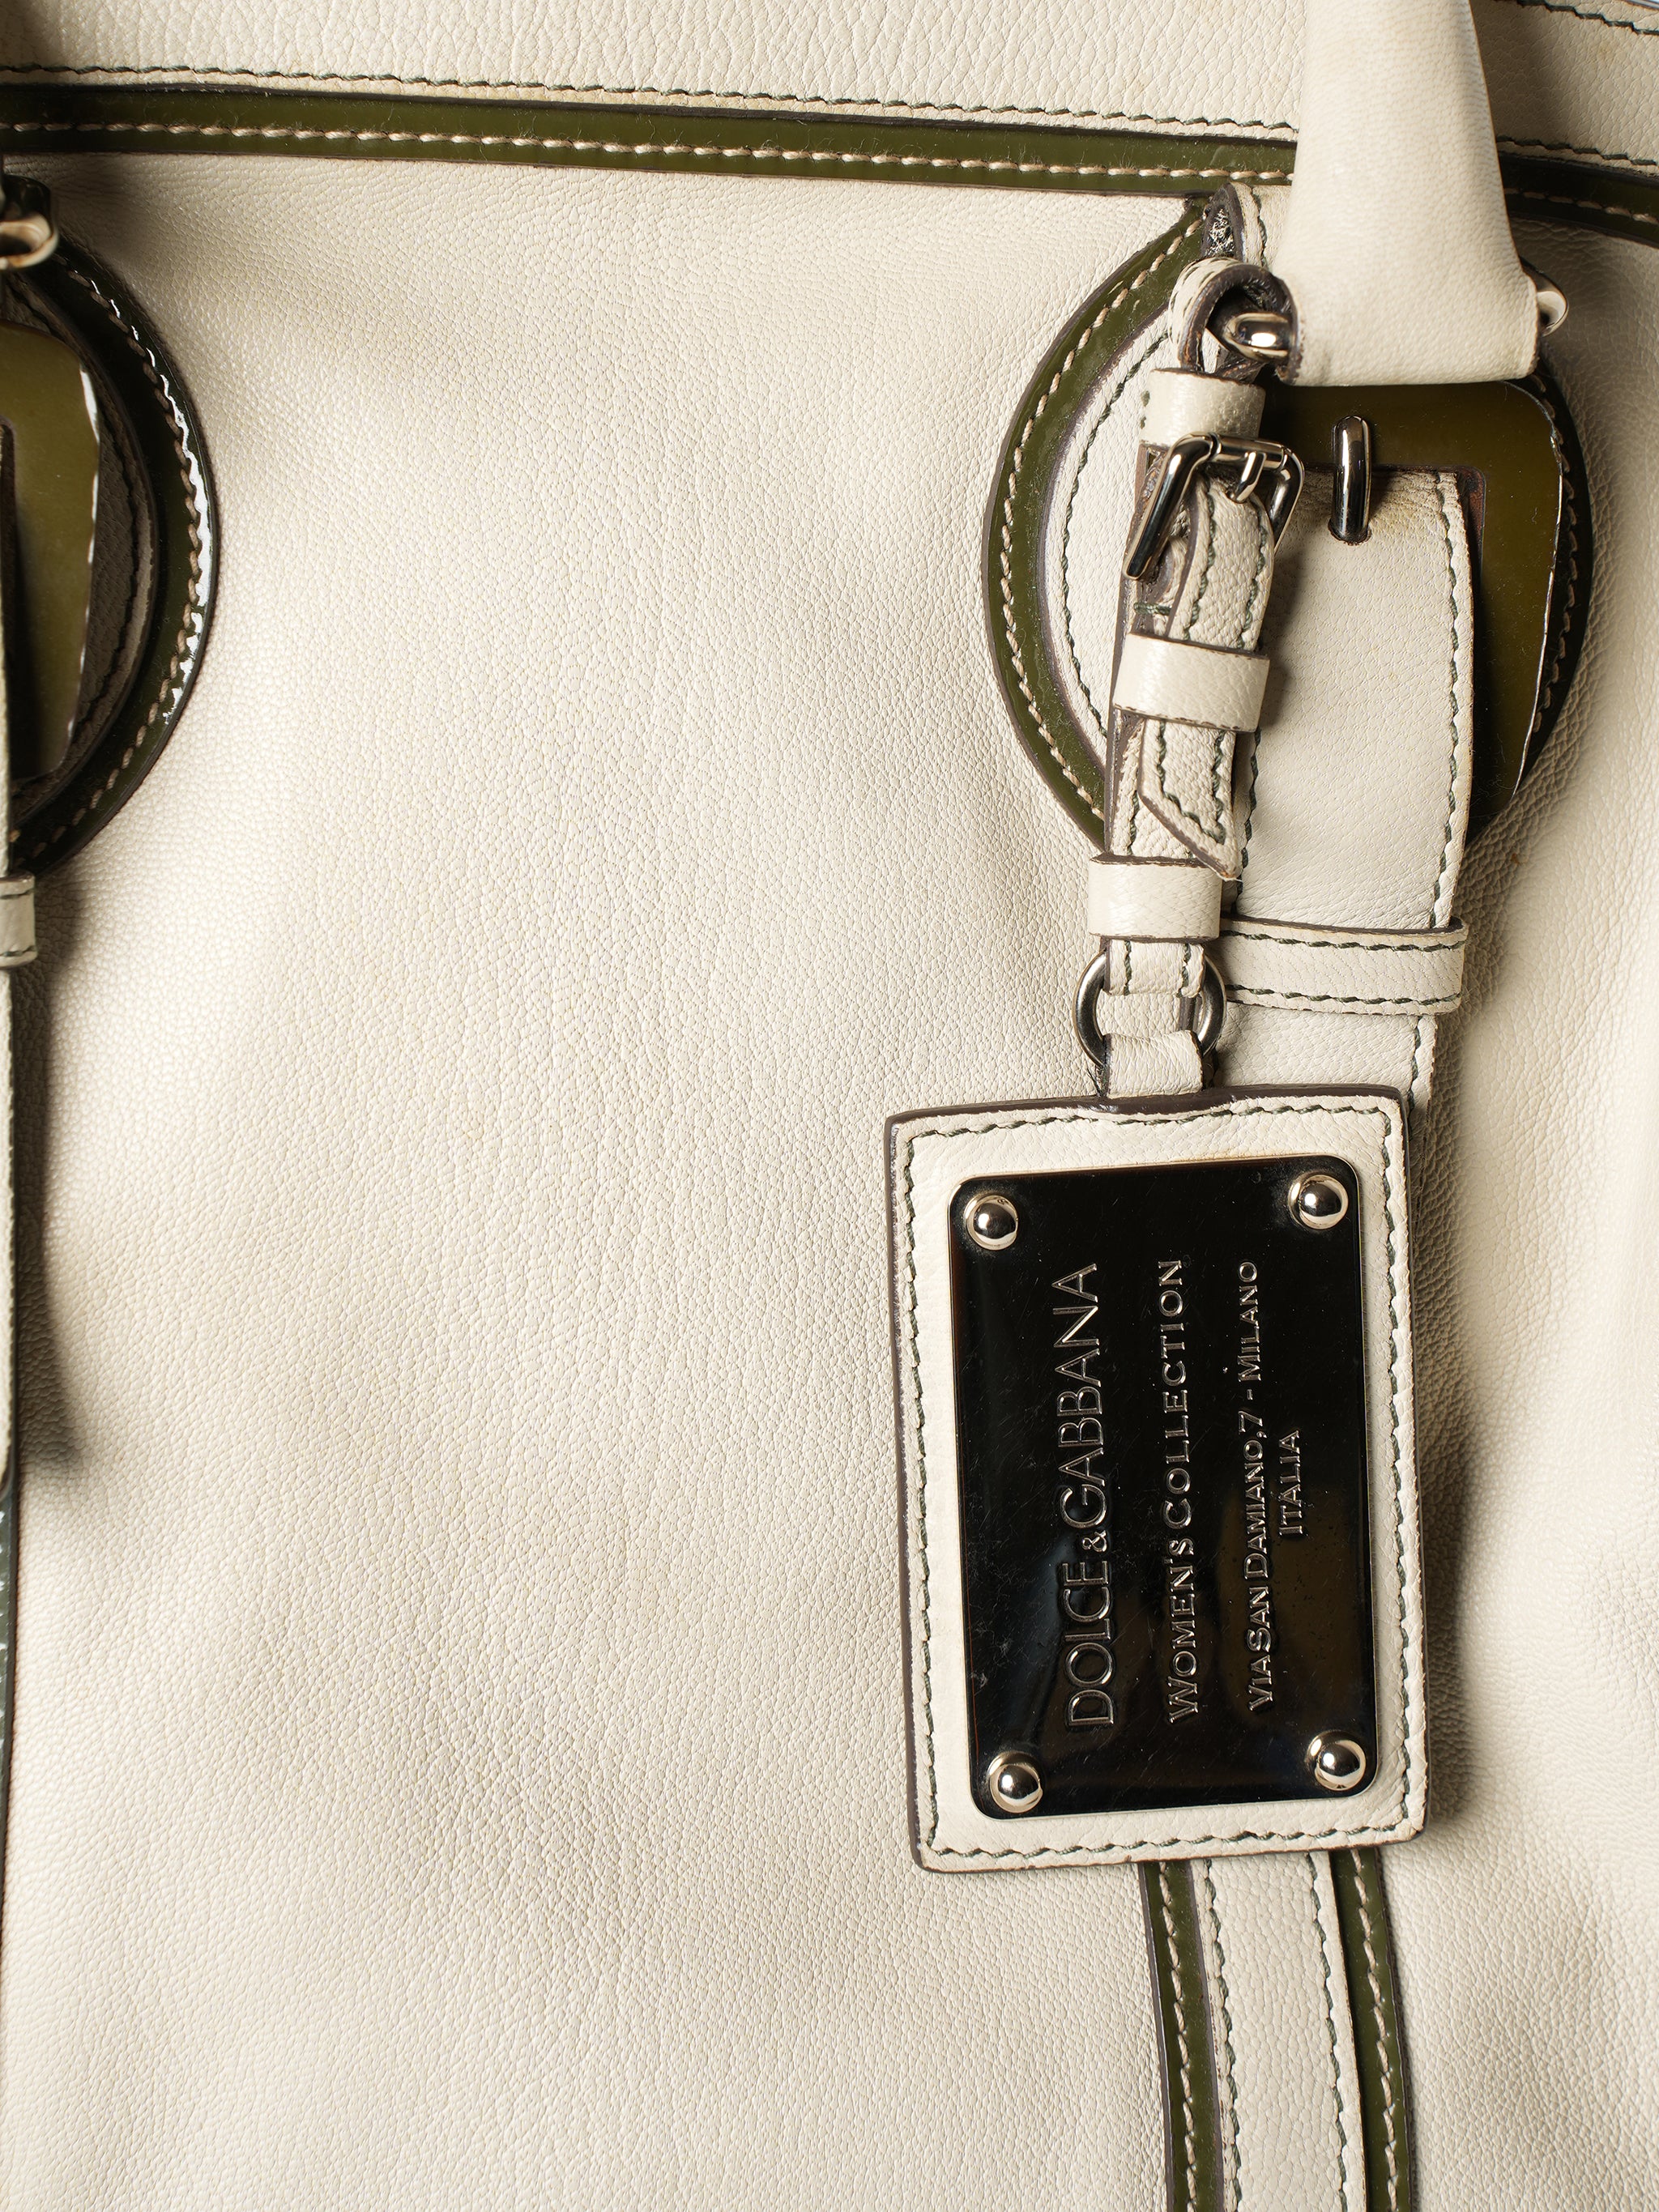 Dolce & Gabbana Beige Leather Tote Bag